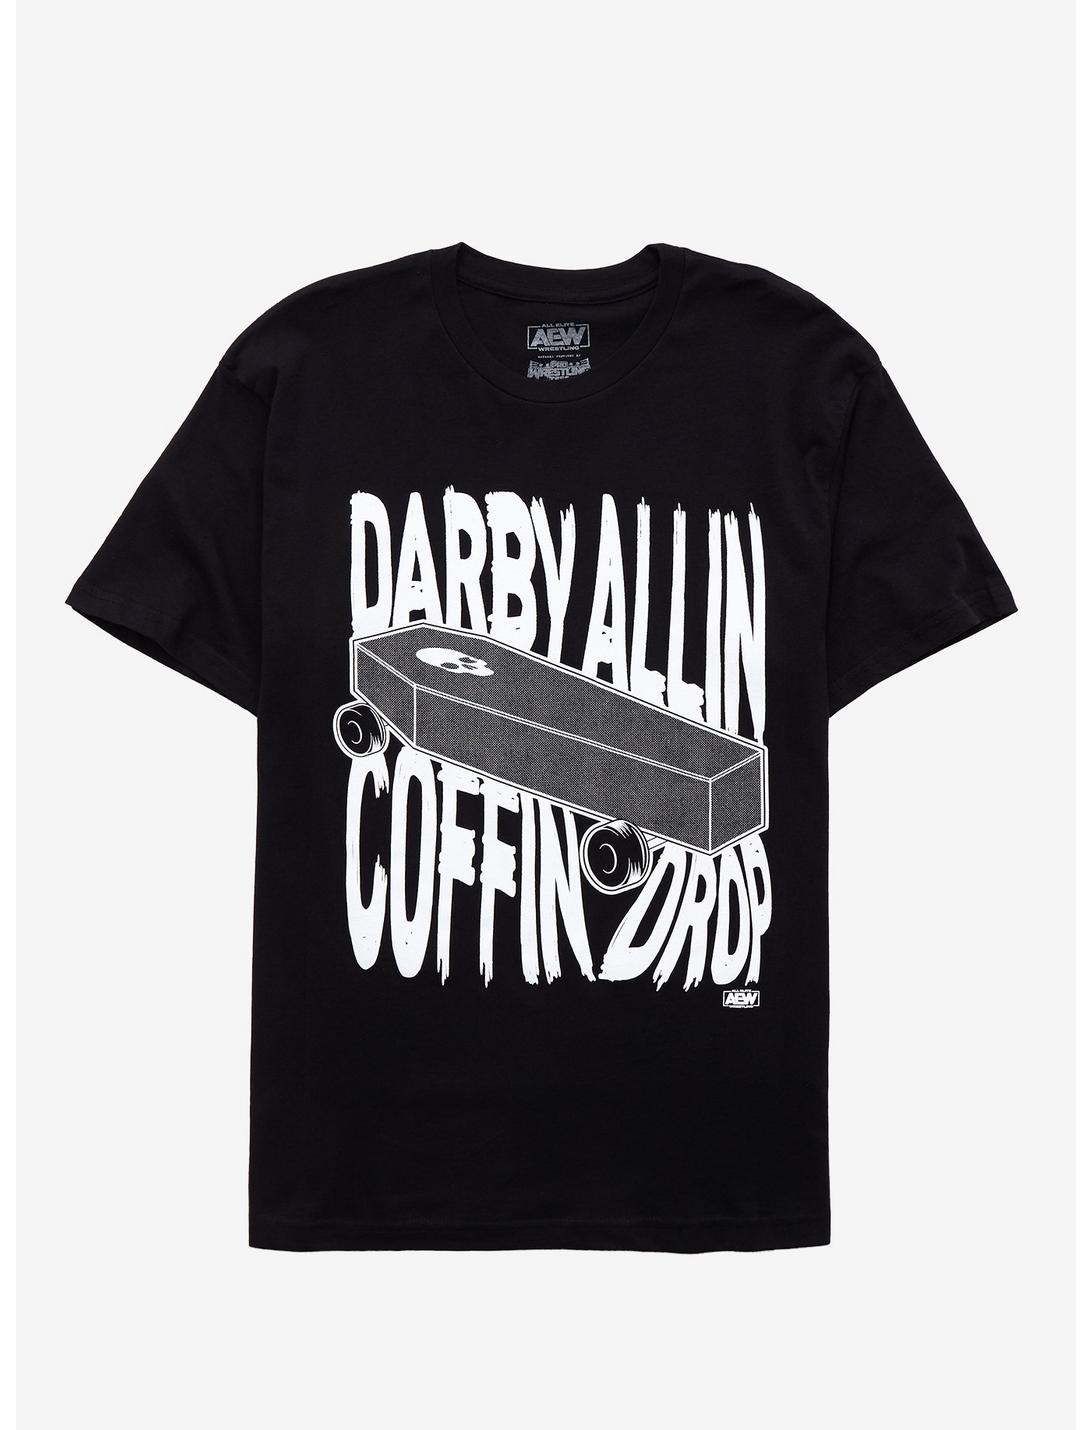 All Elite Wrestling Darby Allin Coffin Drop T-Shirt, BLACK, hi-res